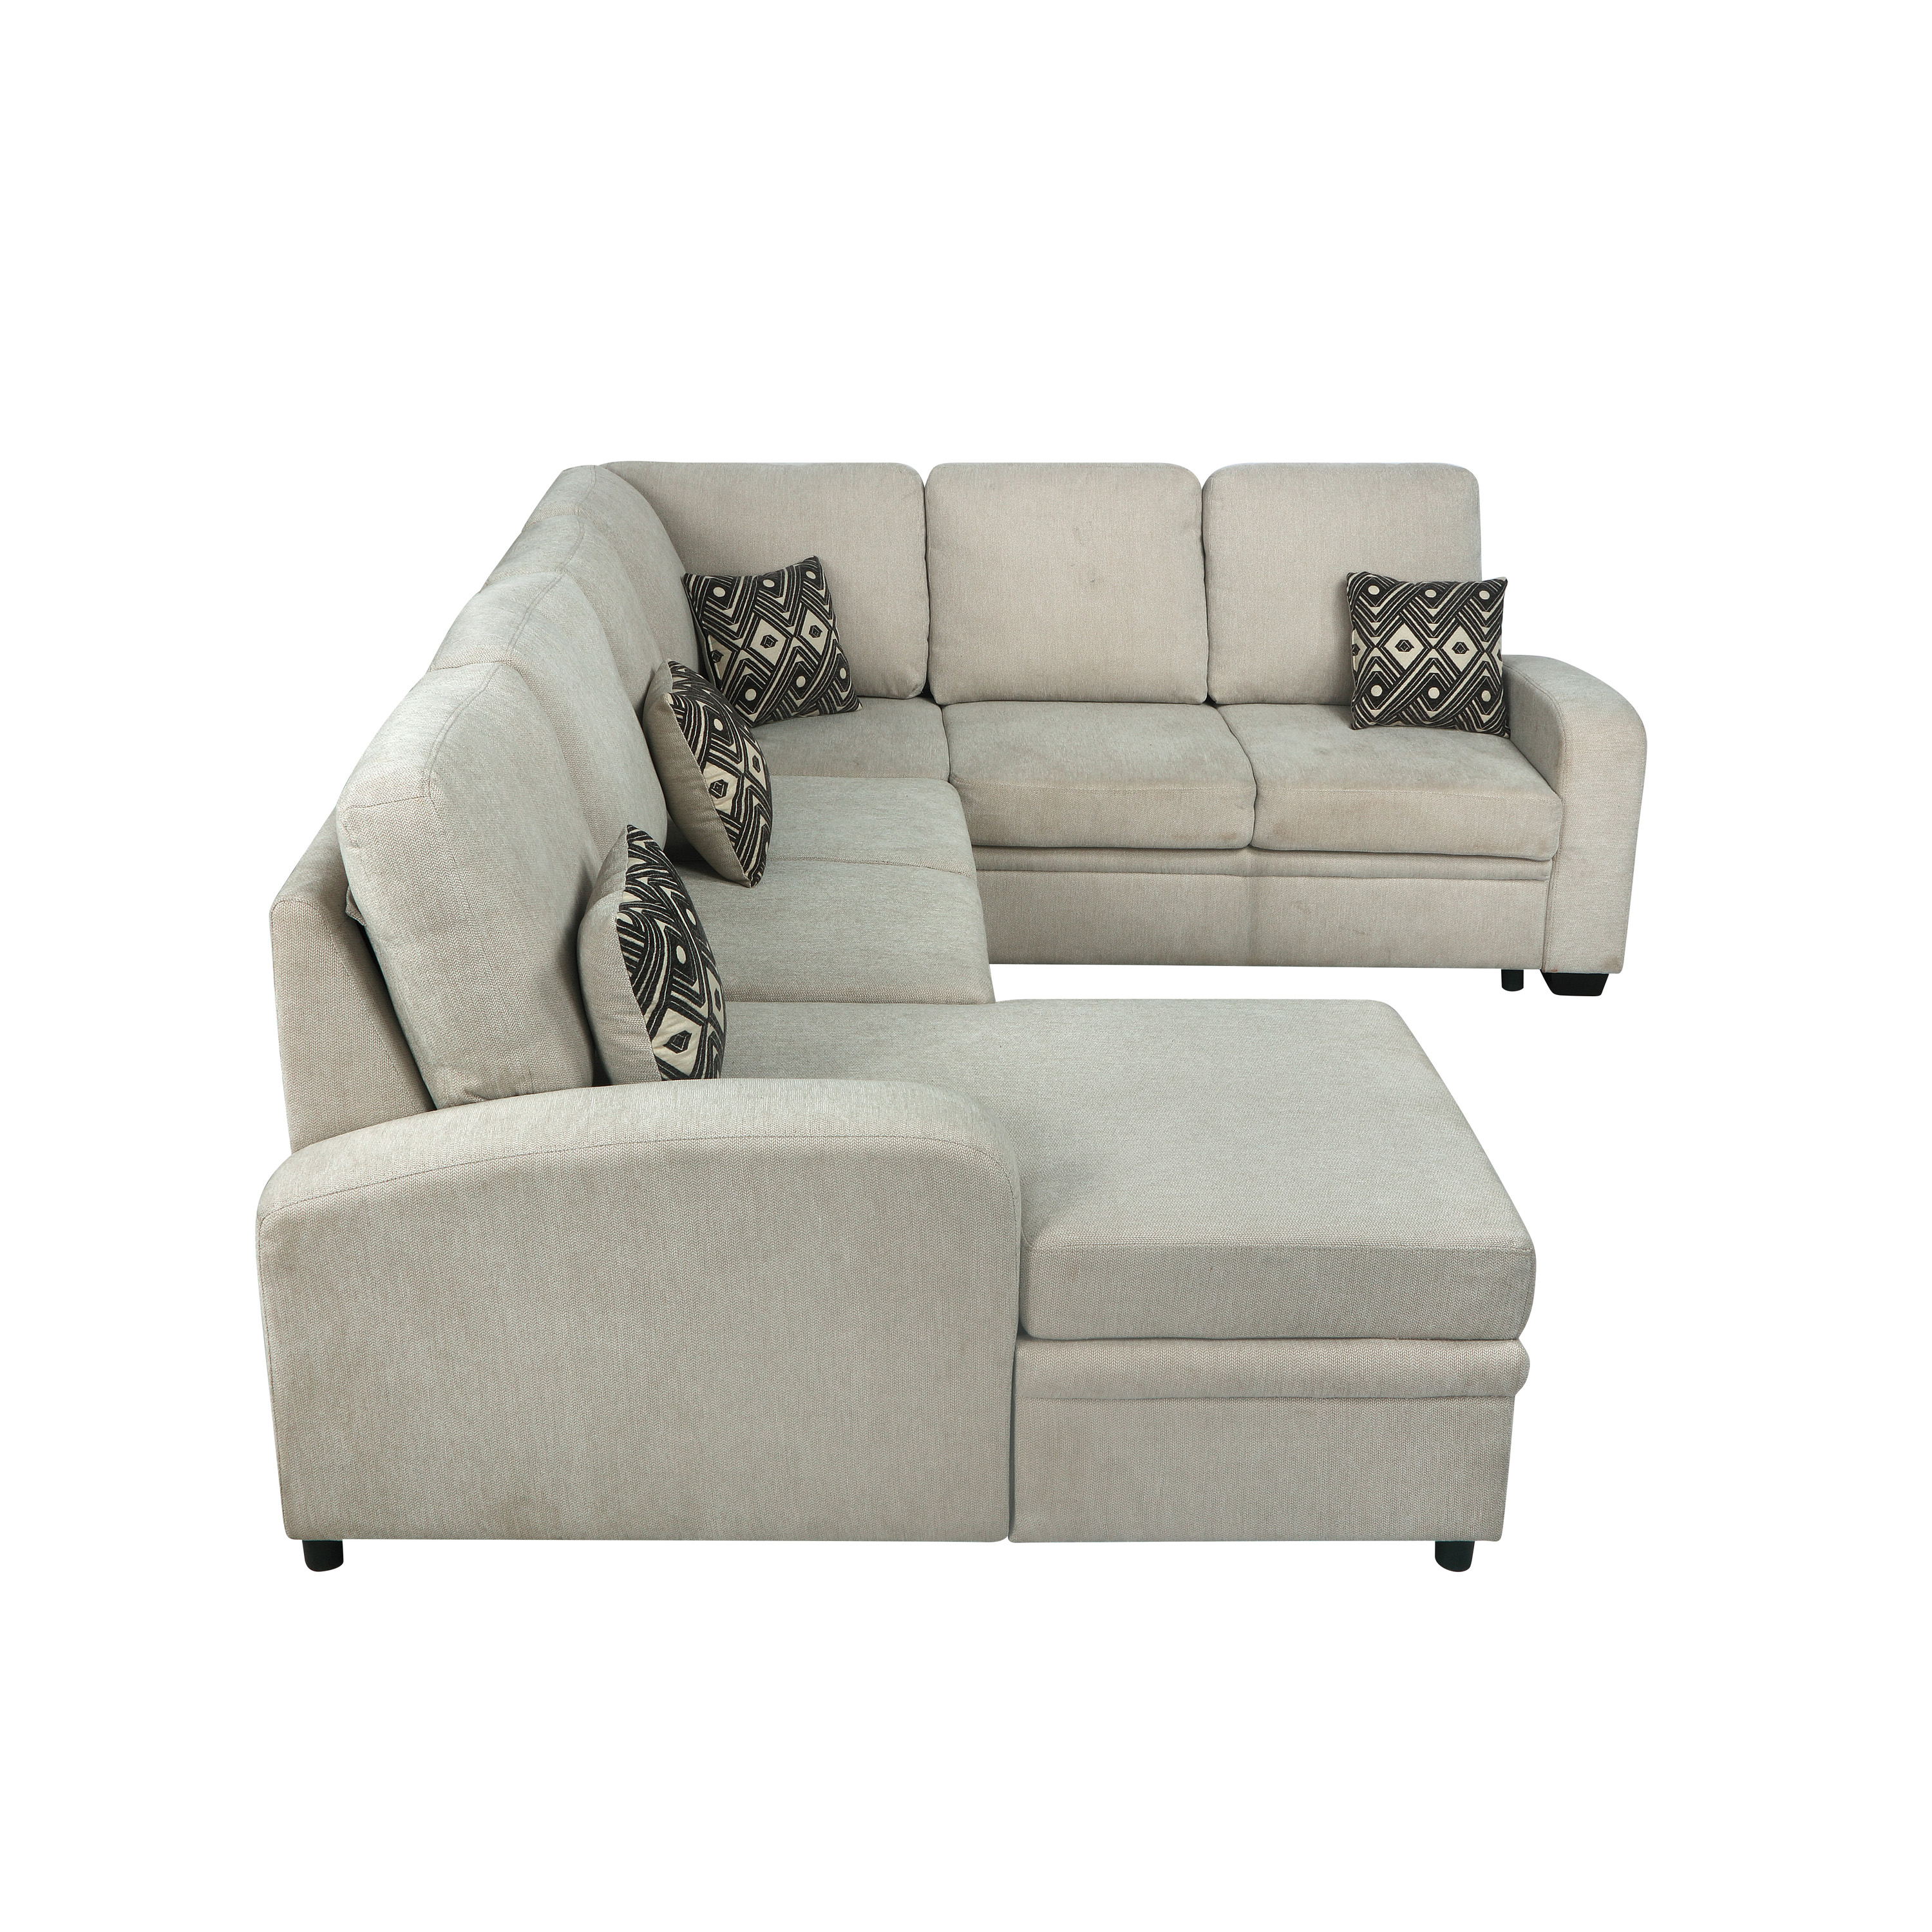 Serta Blair Multifunctional Indoor Sectional Sofa with USB & Power, Beige - image 5 of 11